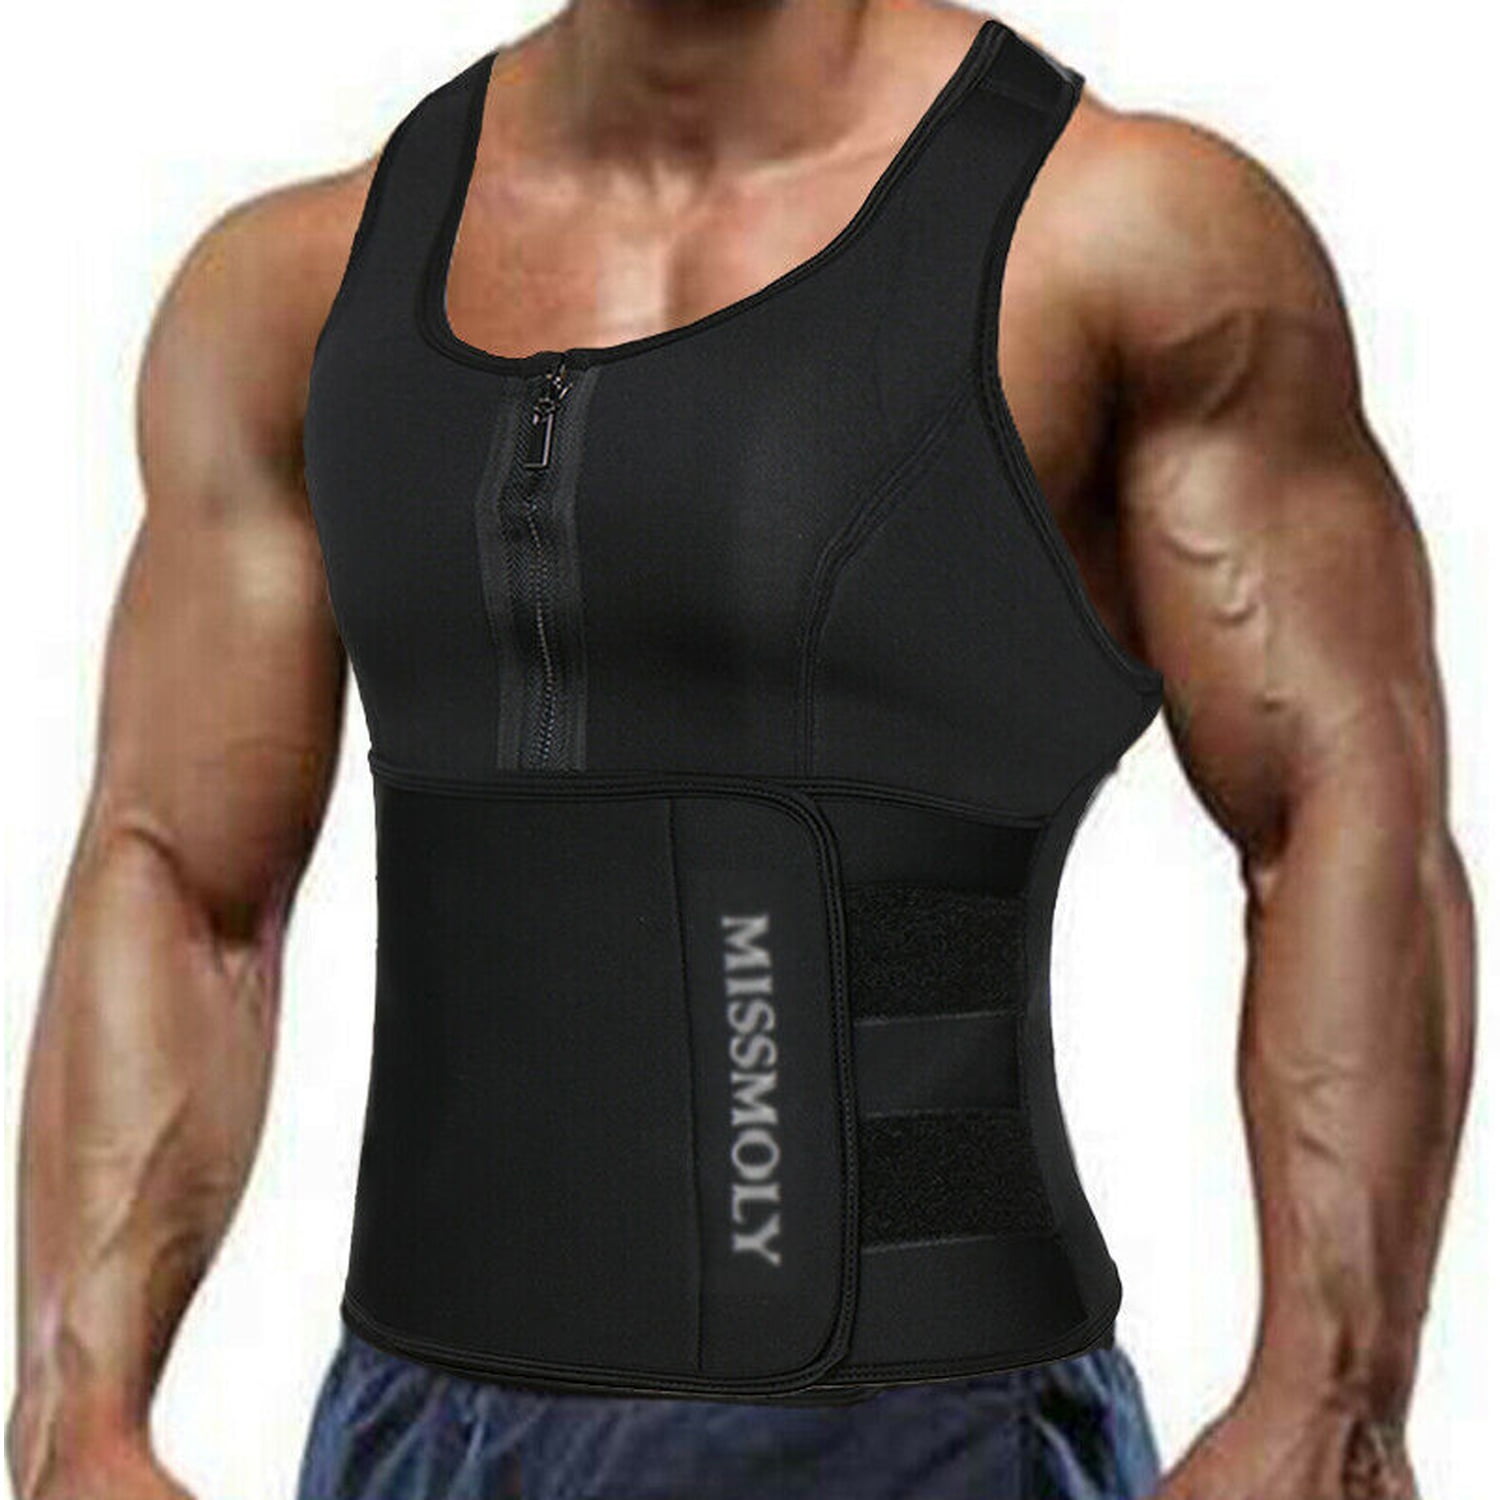 Neoprene Sauna Suit Tank Top for Men Gym Shirt Weight Loss Shaper Workout Vest 